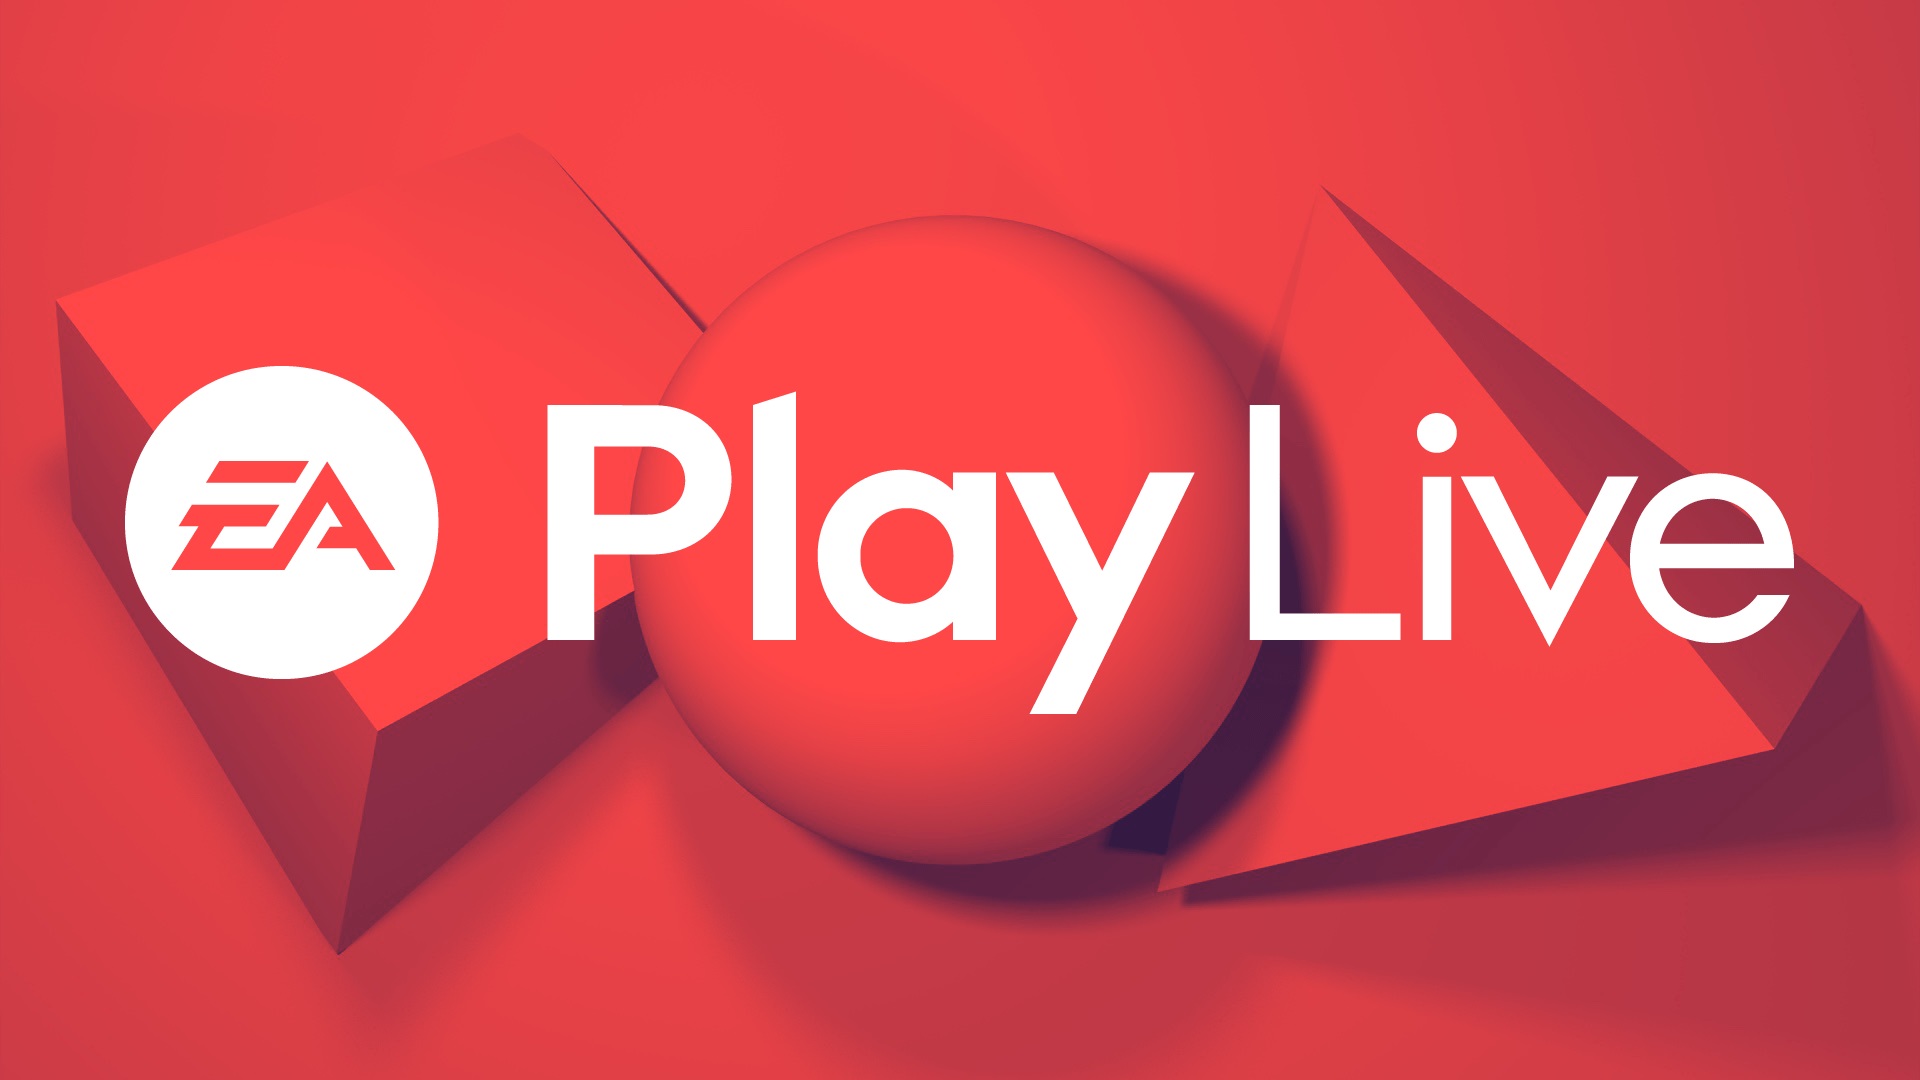 EA Play Live Show